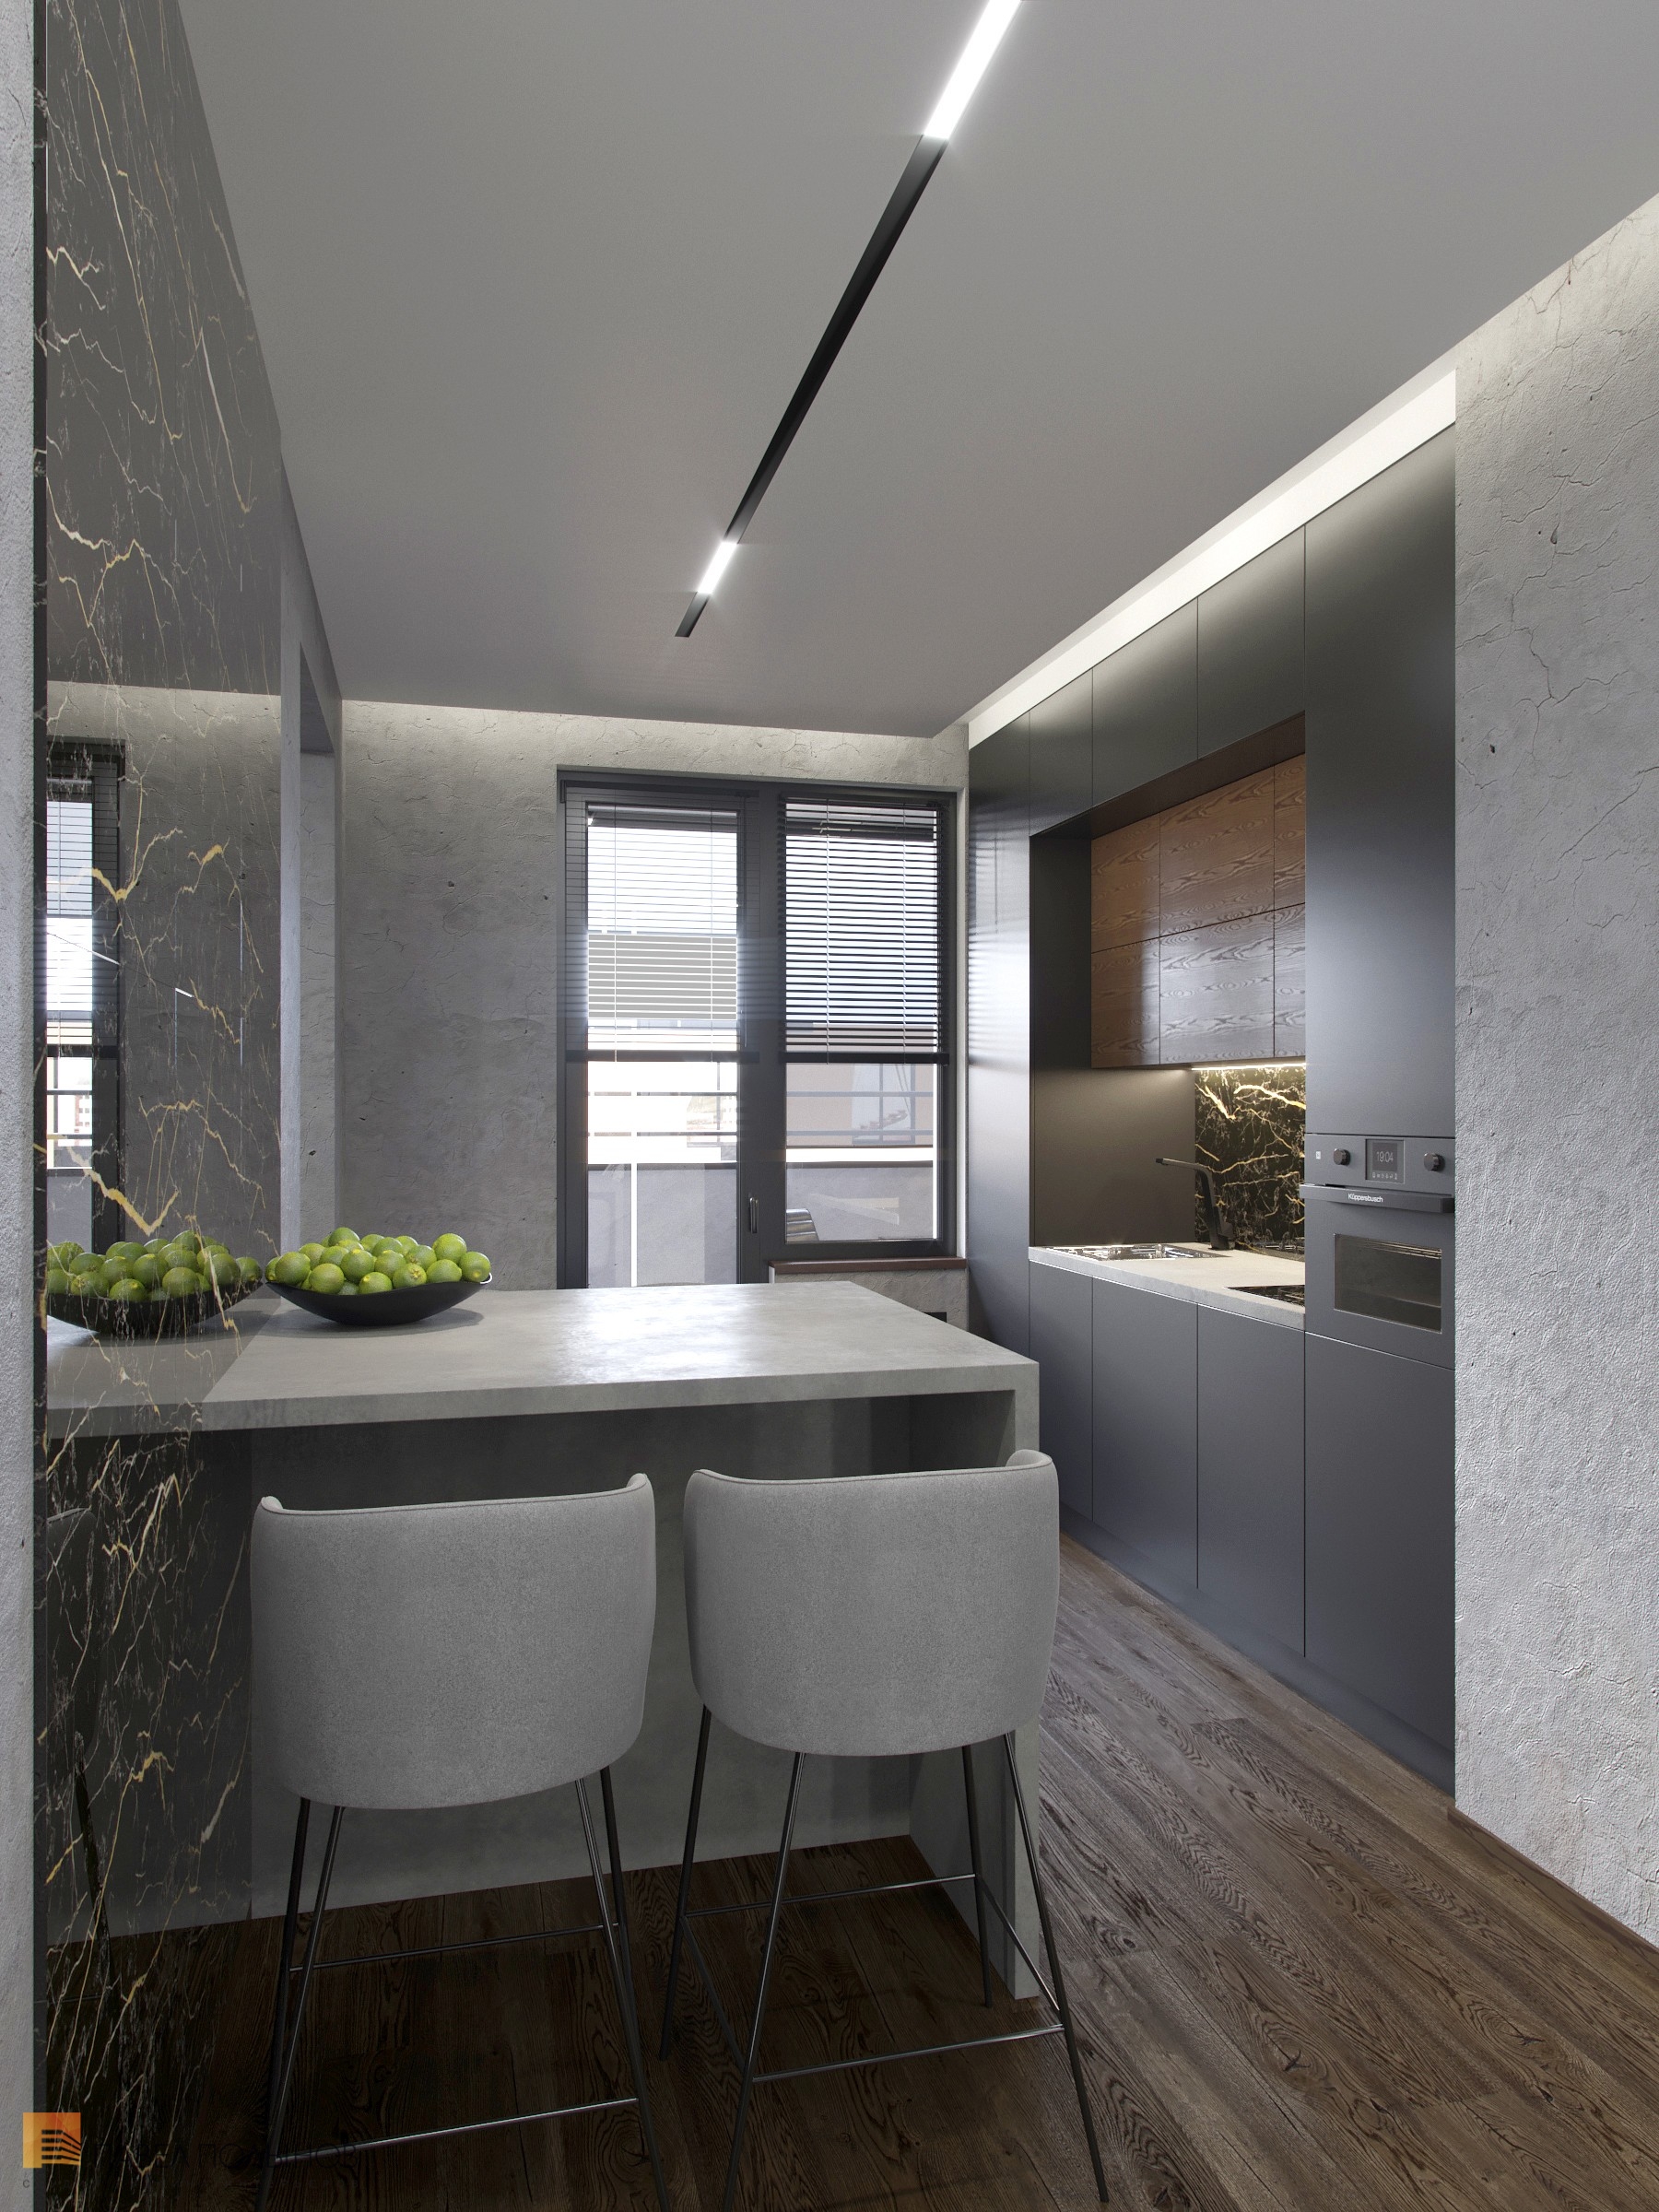 Фото кухня из проекта «Интерьер квартиры-евродвушки в стиле минимализм, ЖК «Европа Сити», 72 кв.м.»